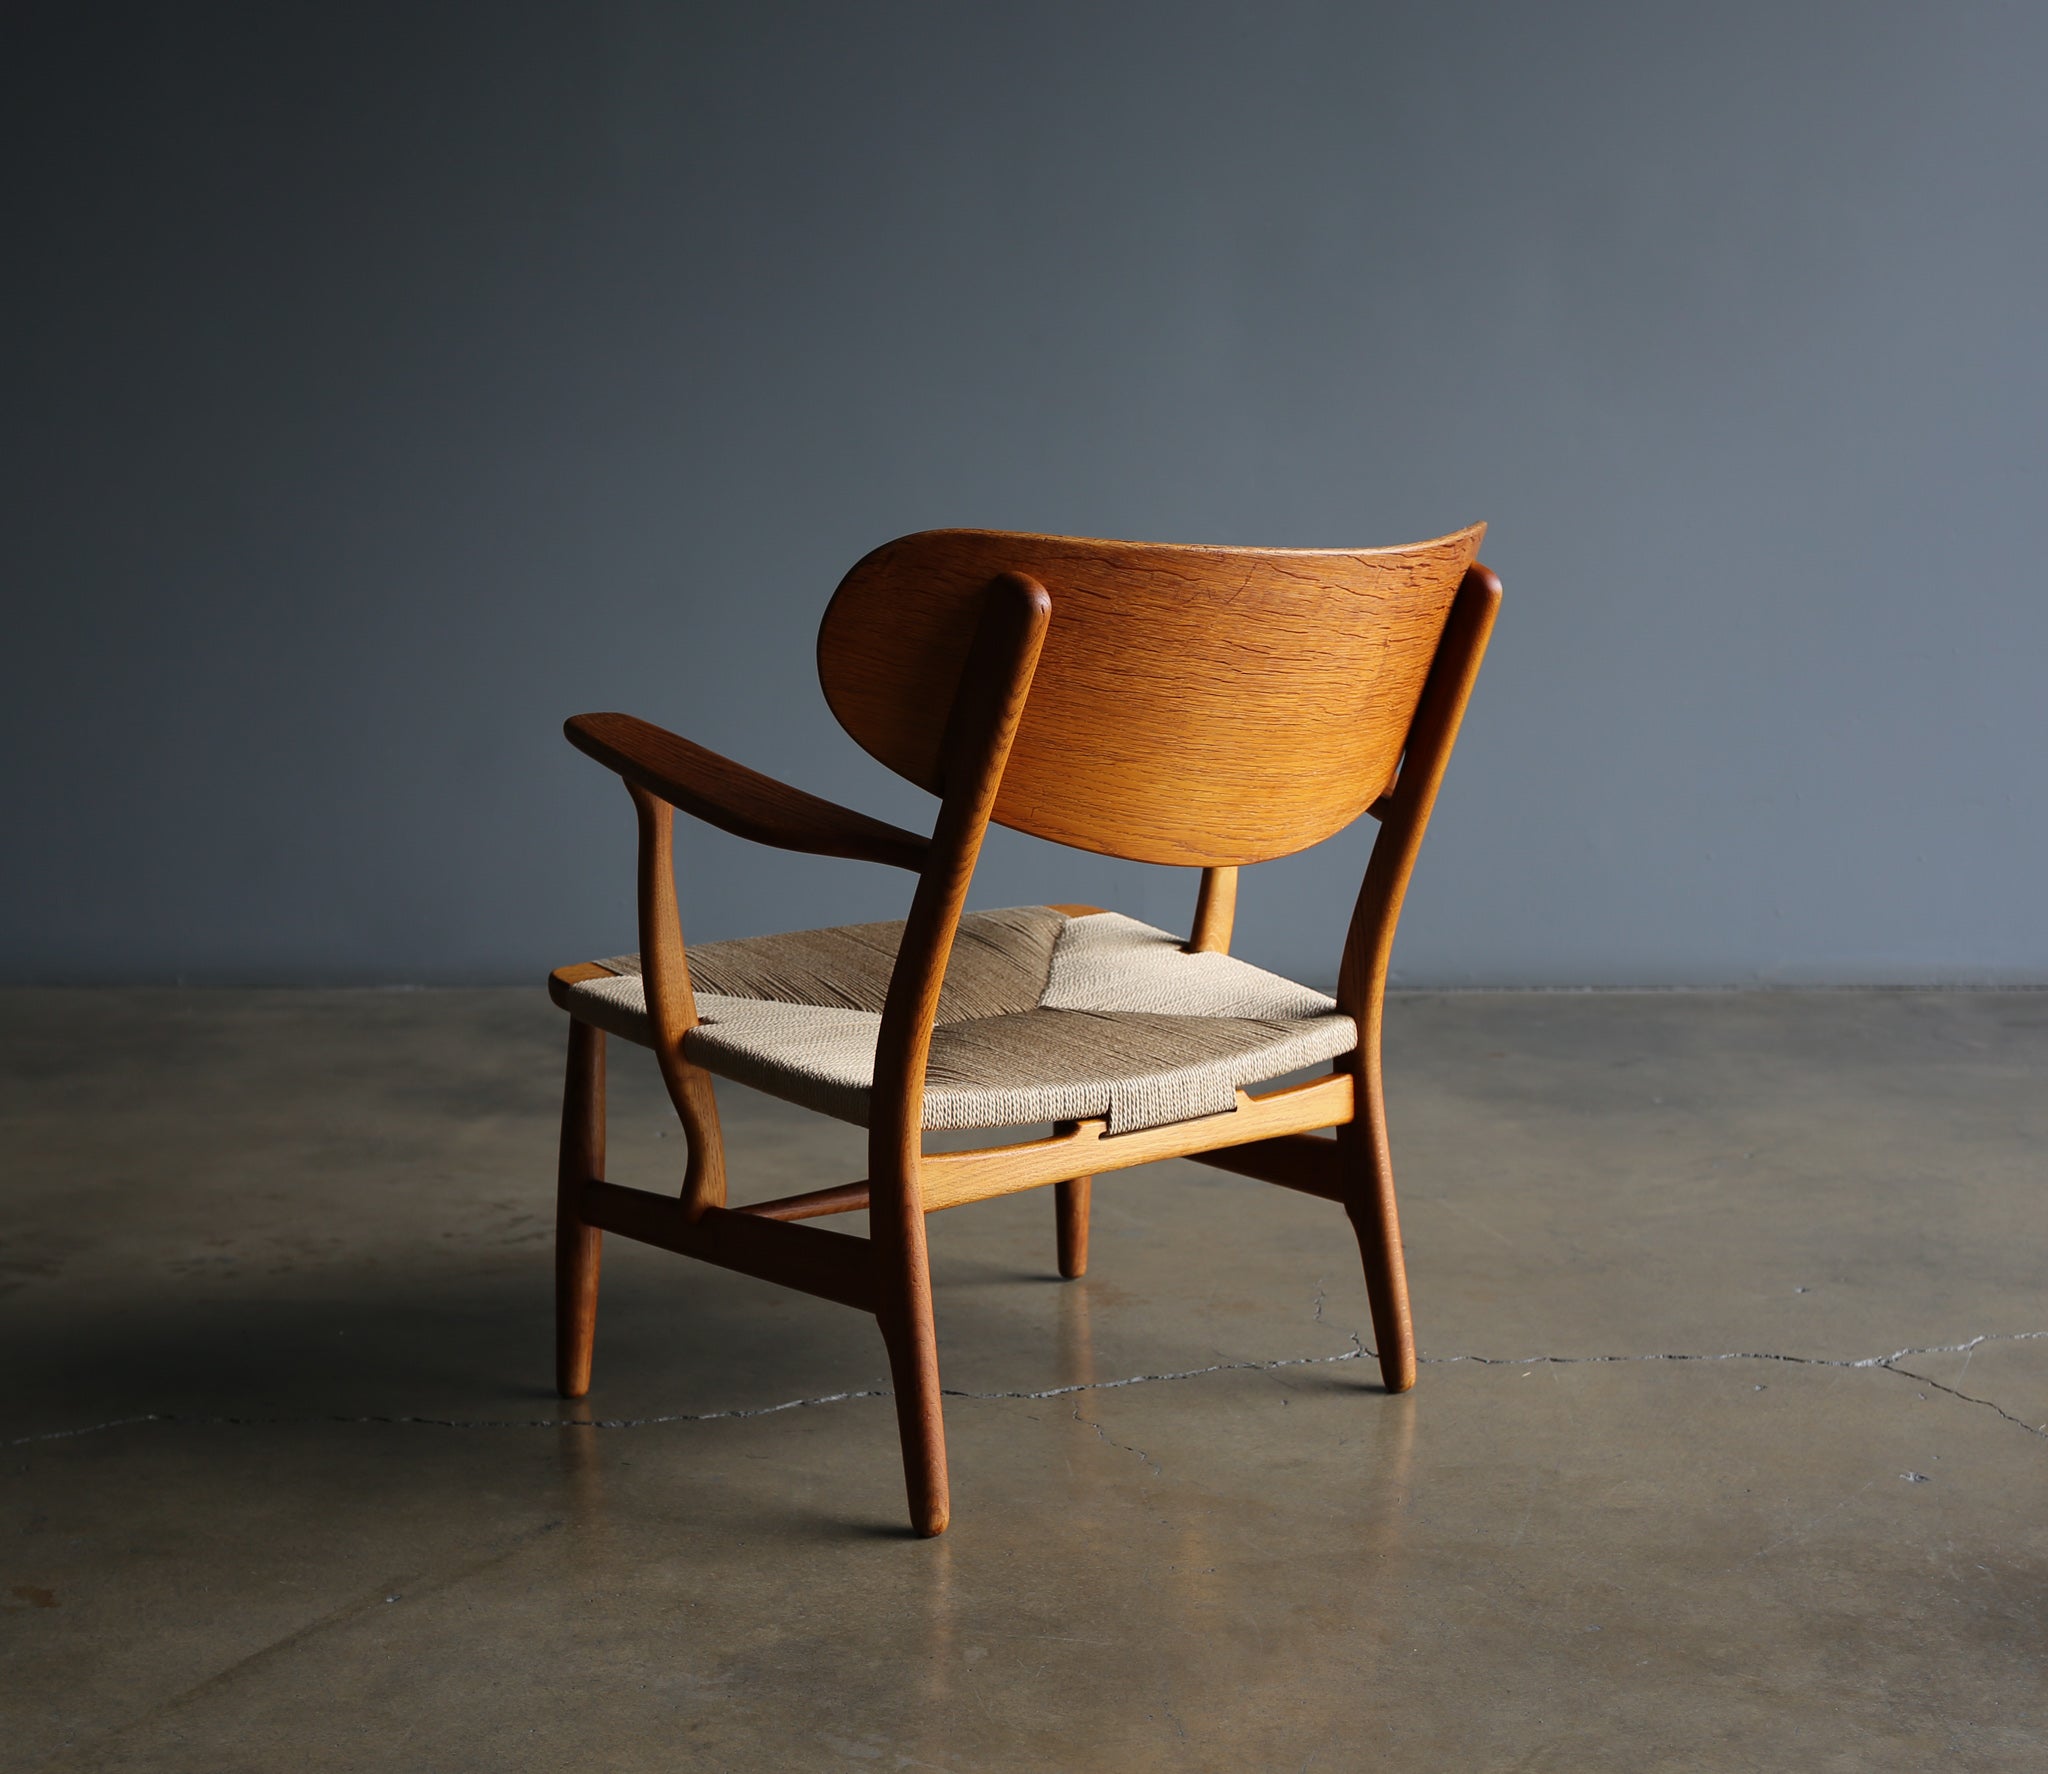 = SOLD = Hans J. Wegner CH22 Lounge Chair for Carl Hansen & Søn, Denmark, circa 1951